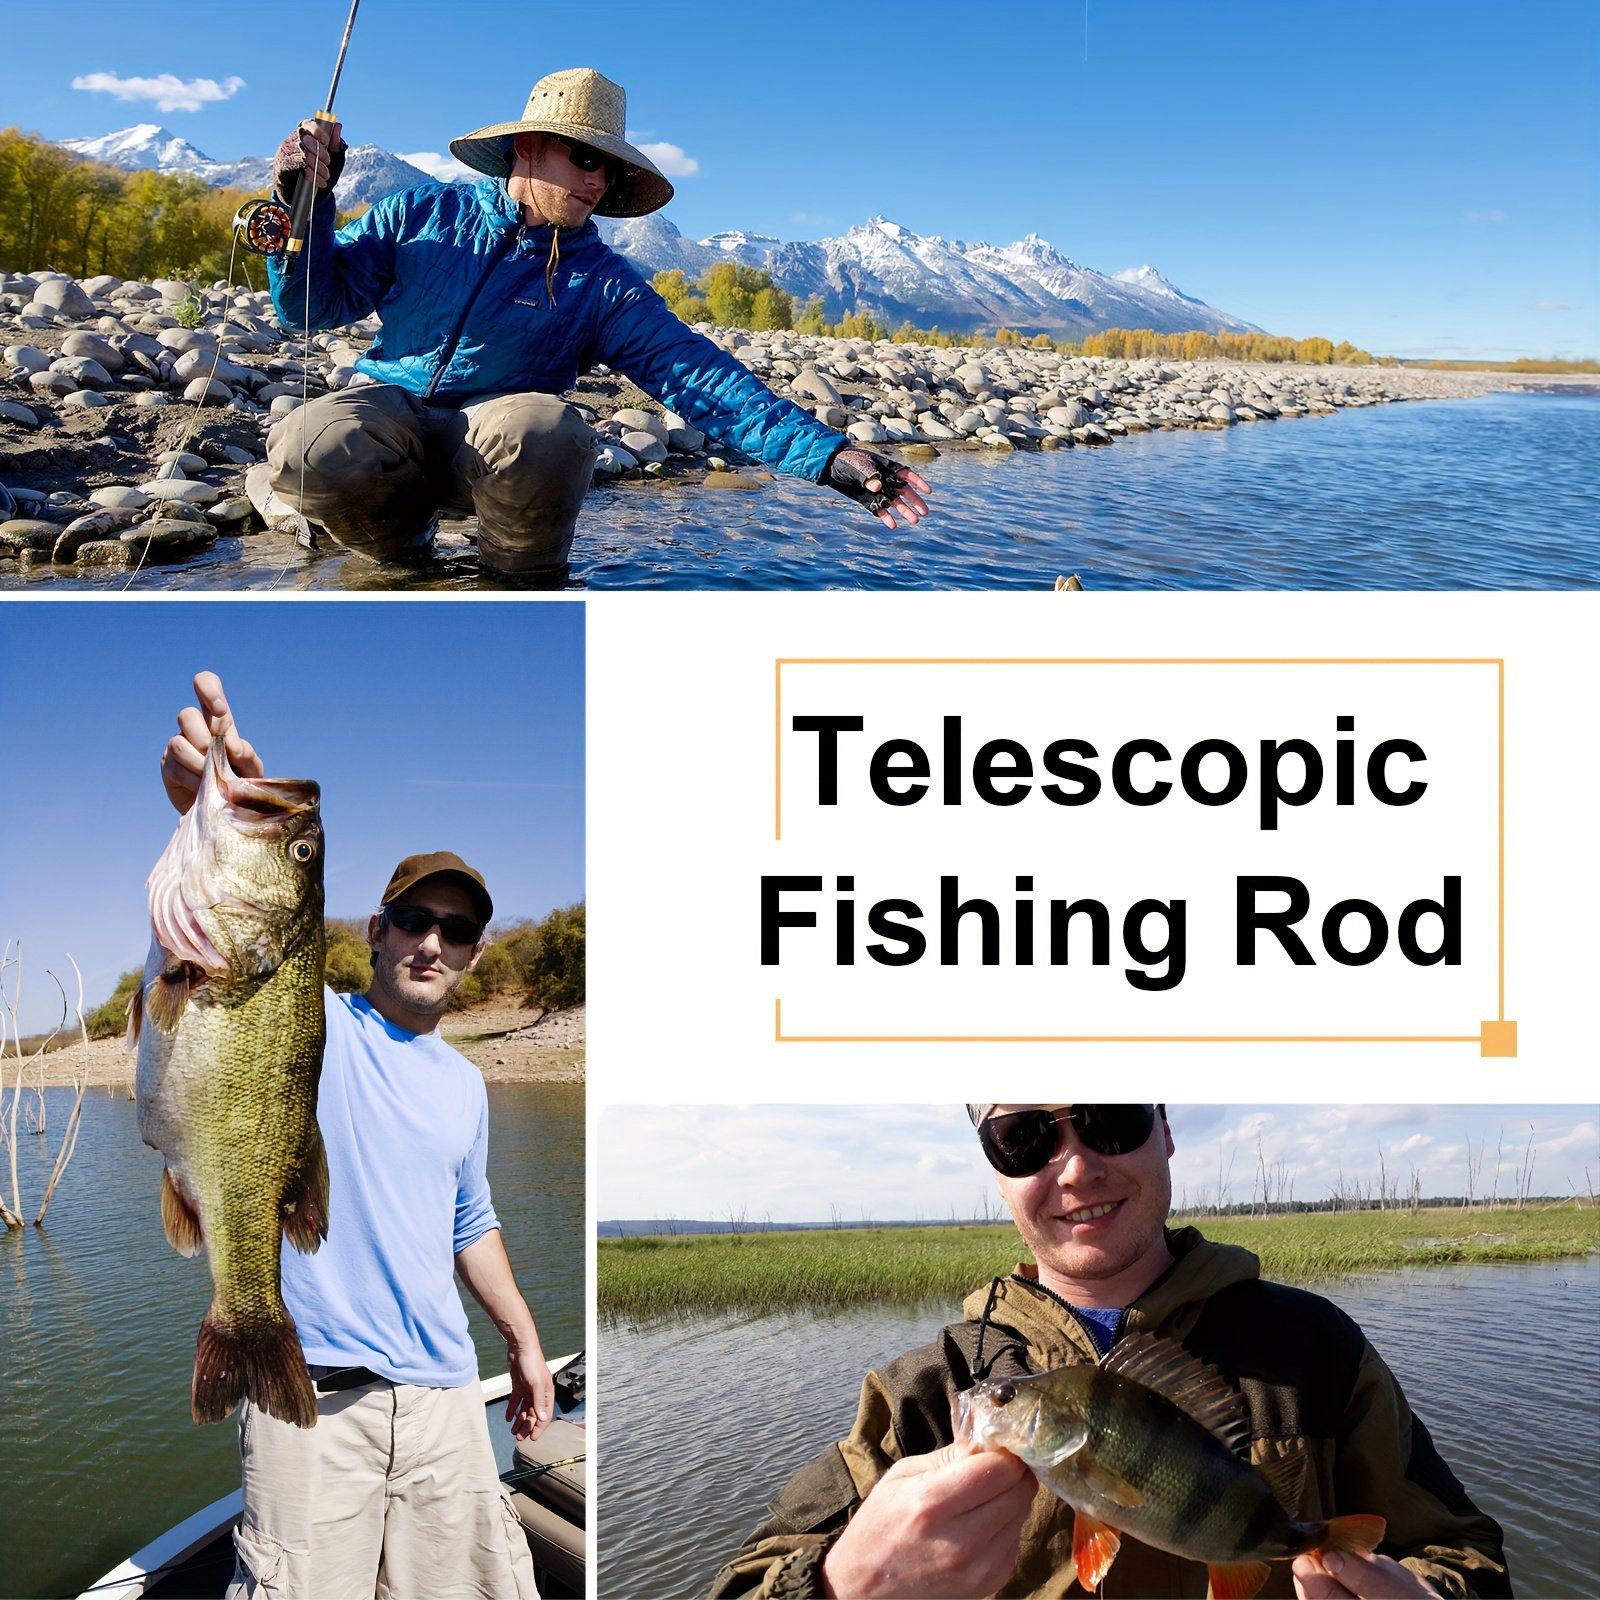 1pc Telescopic Fishing Rod, 51.18inch Fishing Pole For Beginner